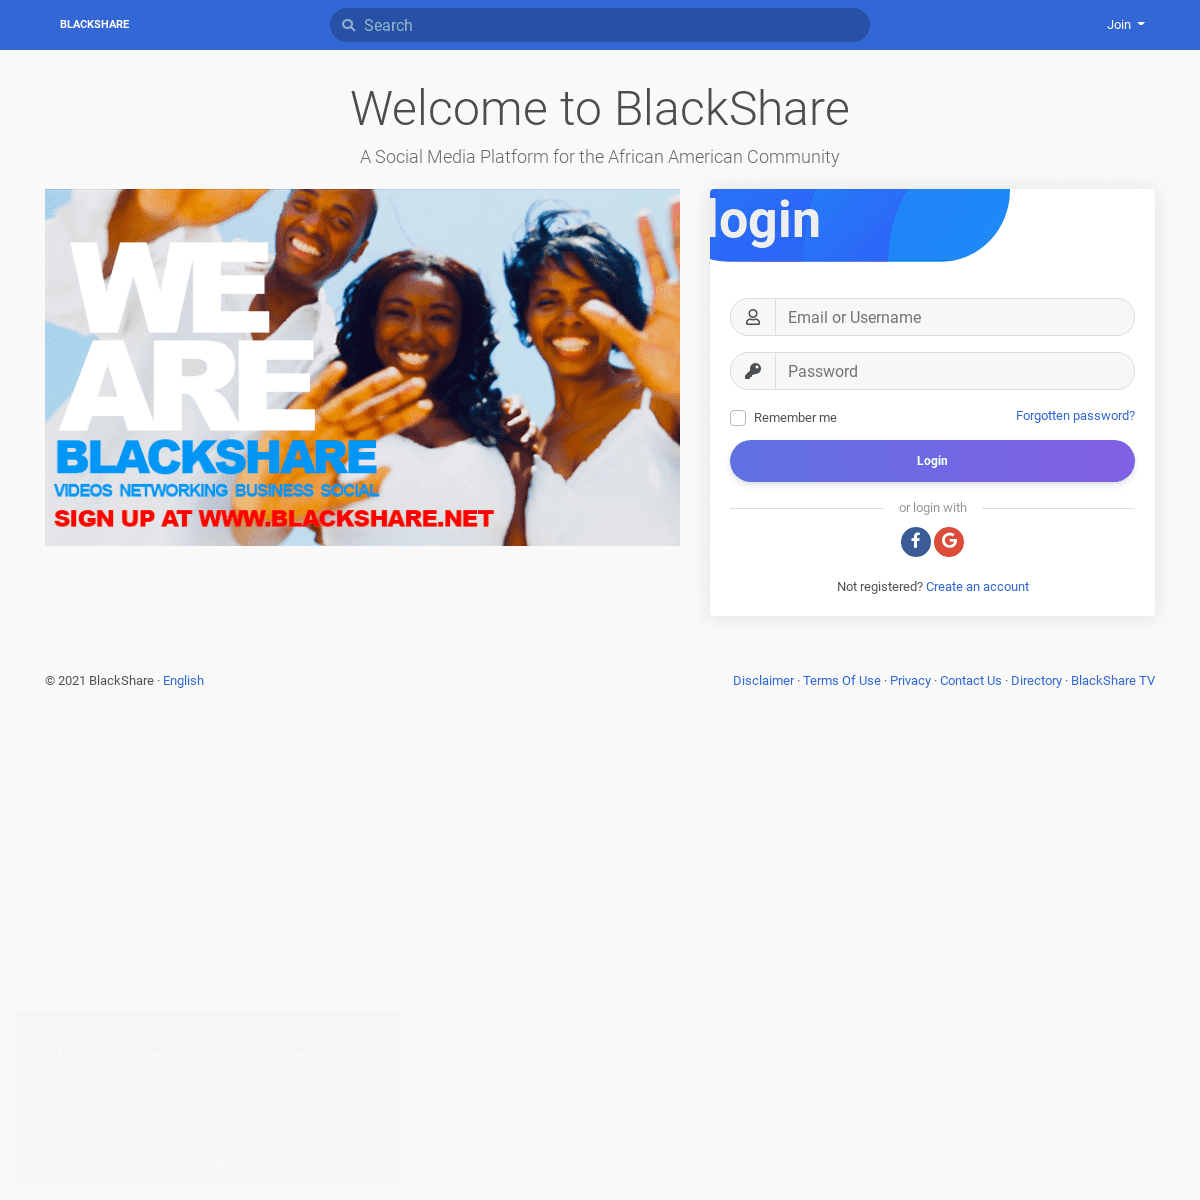 A complete backup of https://blackshare.net